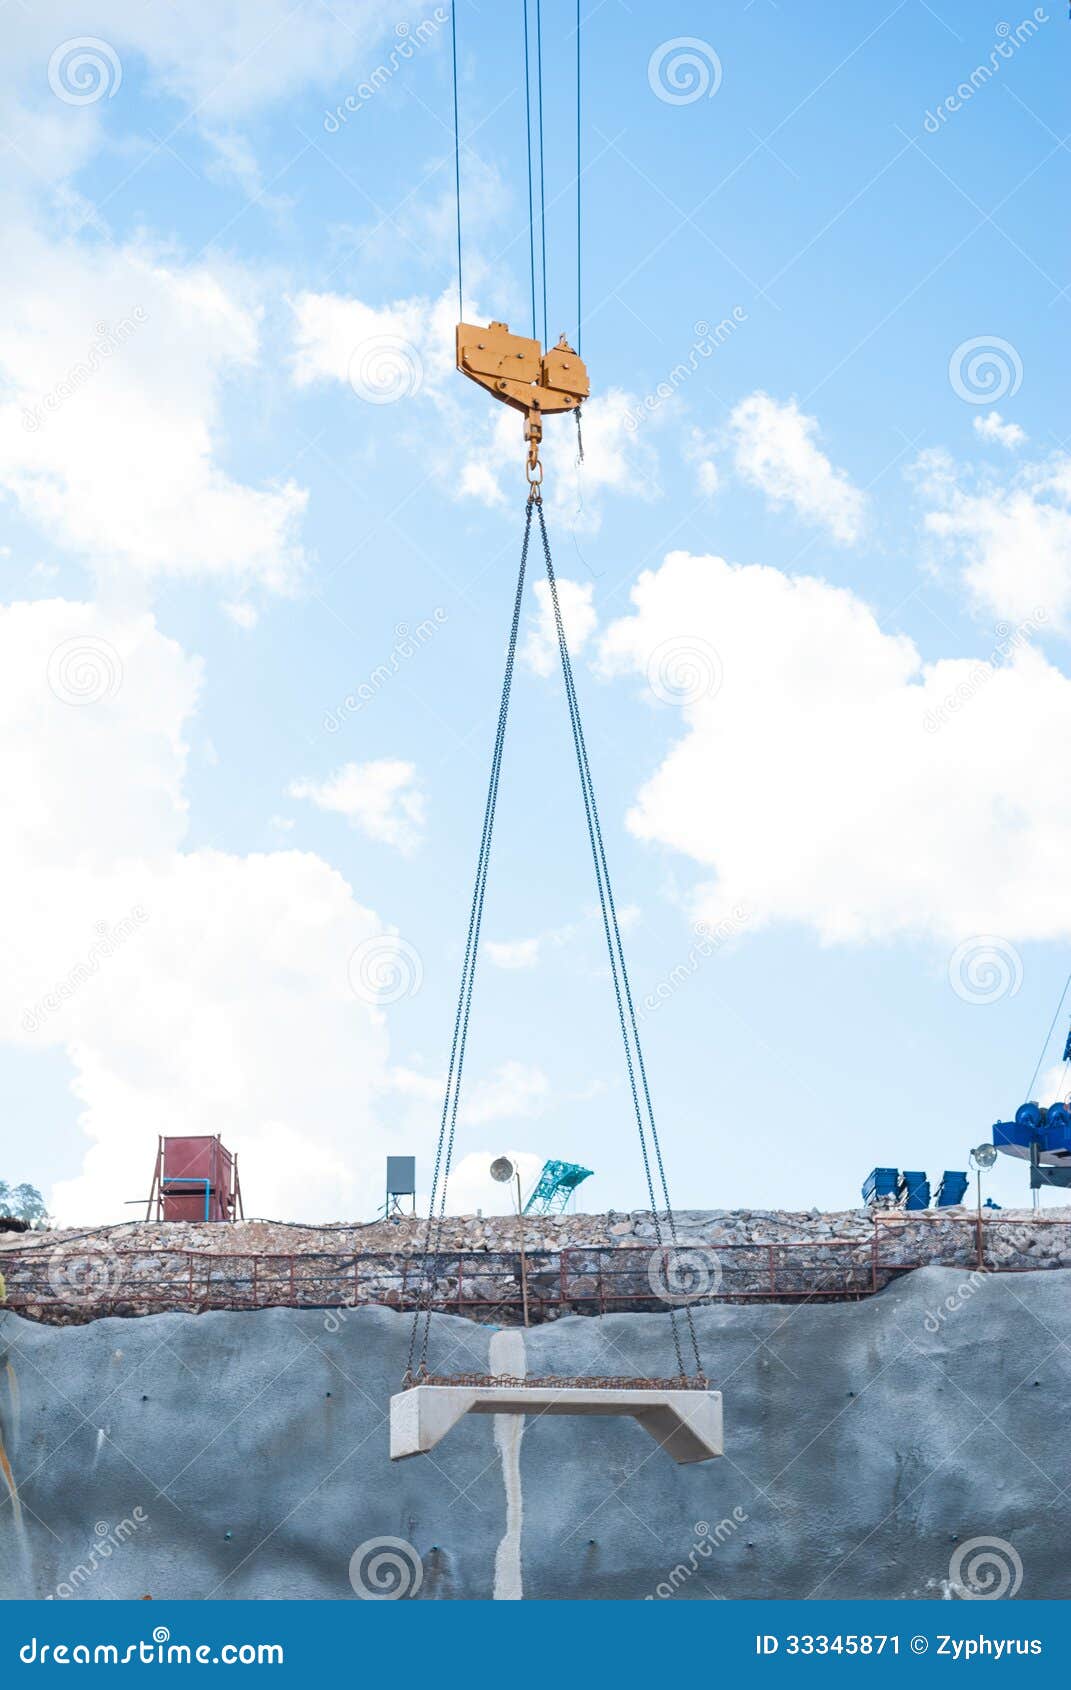 crane hoisting concrete blocks